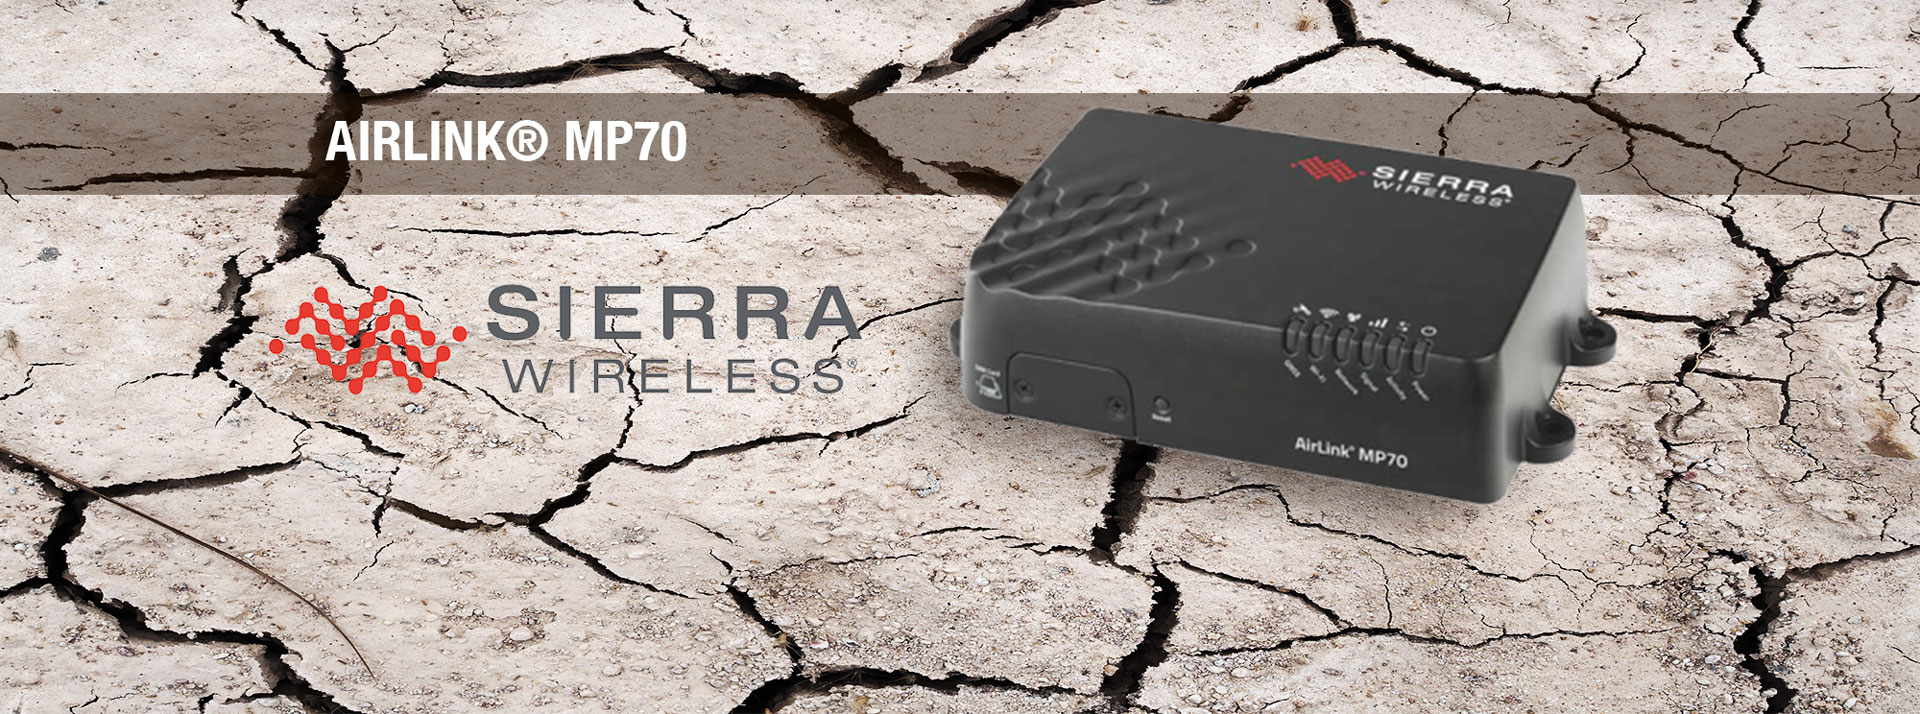 Sierra Wireless Airlink MP70